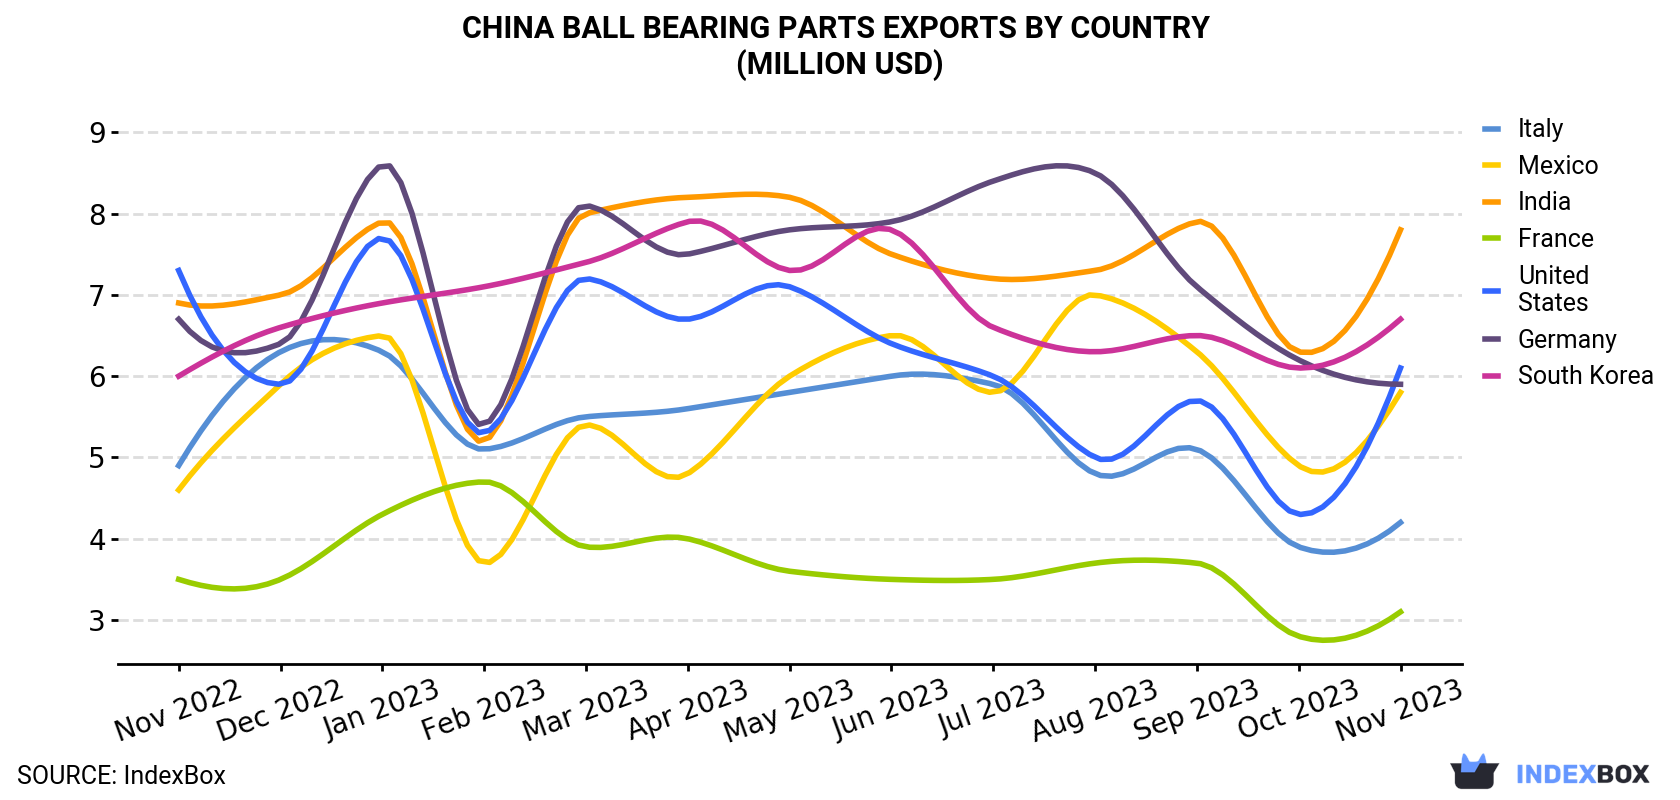 China Ball Bearing Parts Exports By Country (Million USD)